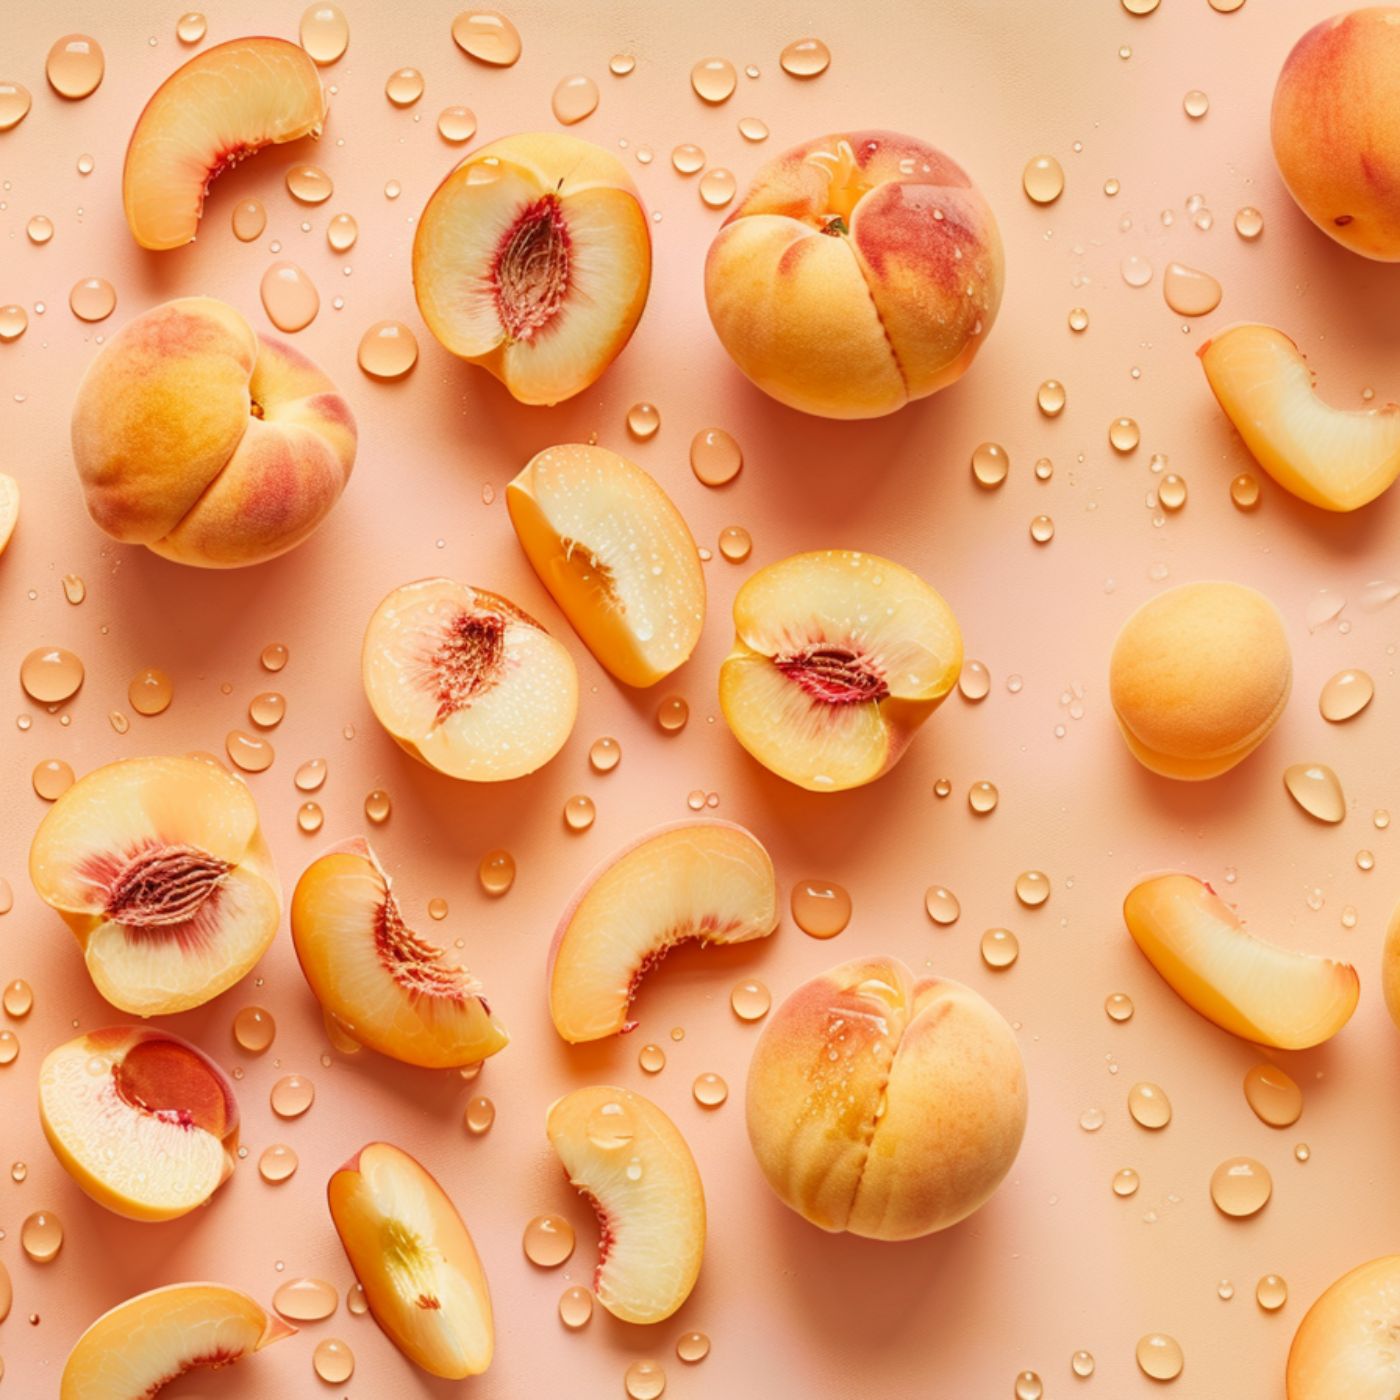 Fruity Burst - White peach